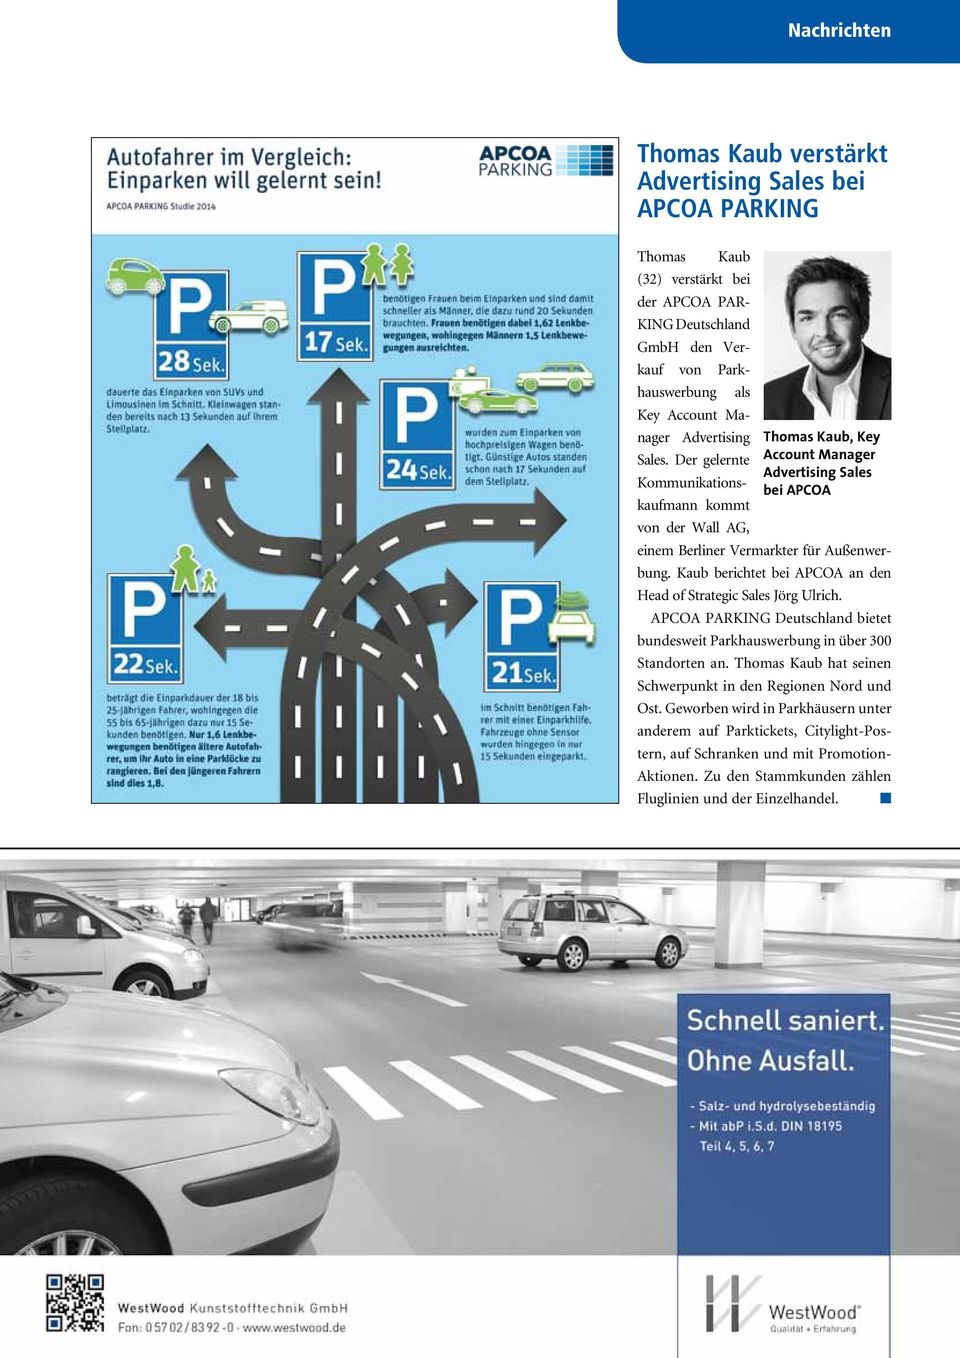 Kaub berichtet bei APCOA an den Head of Strategic Sales Jörg Ulrich. APCOA PARKING Deutschland bietet bundesweit Parkhauswerbung in über 300 Standorten an.